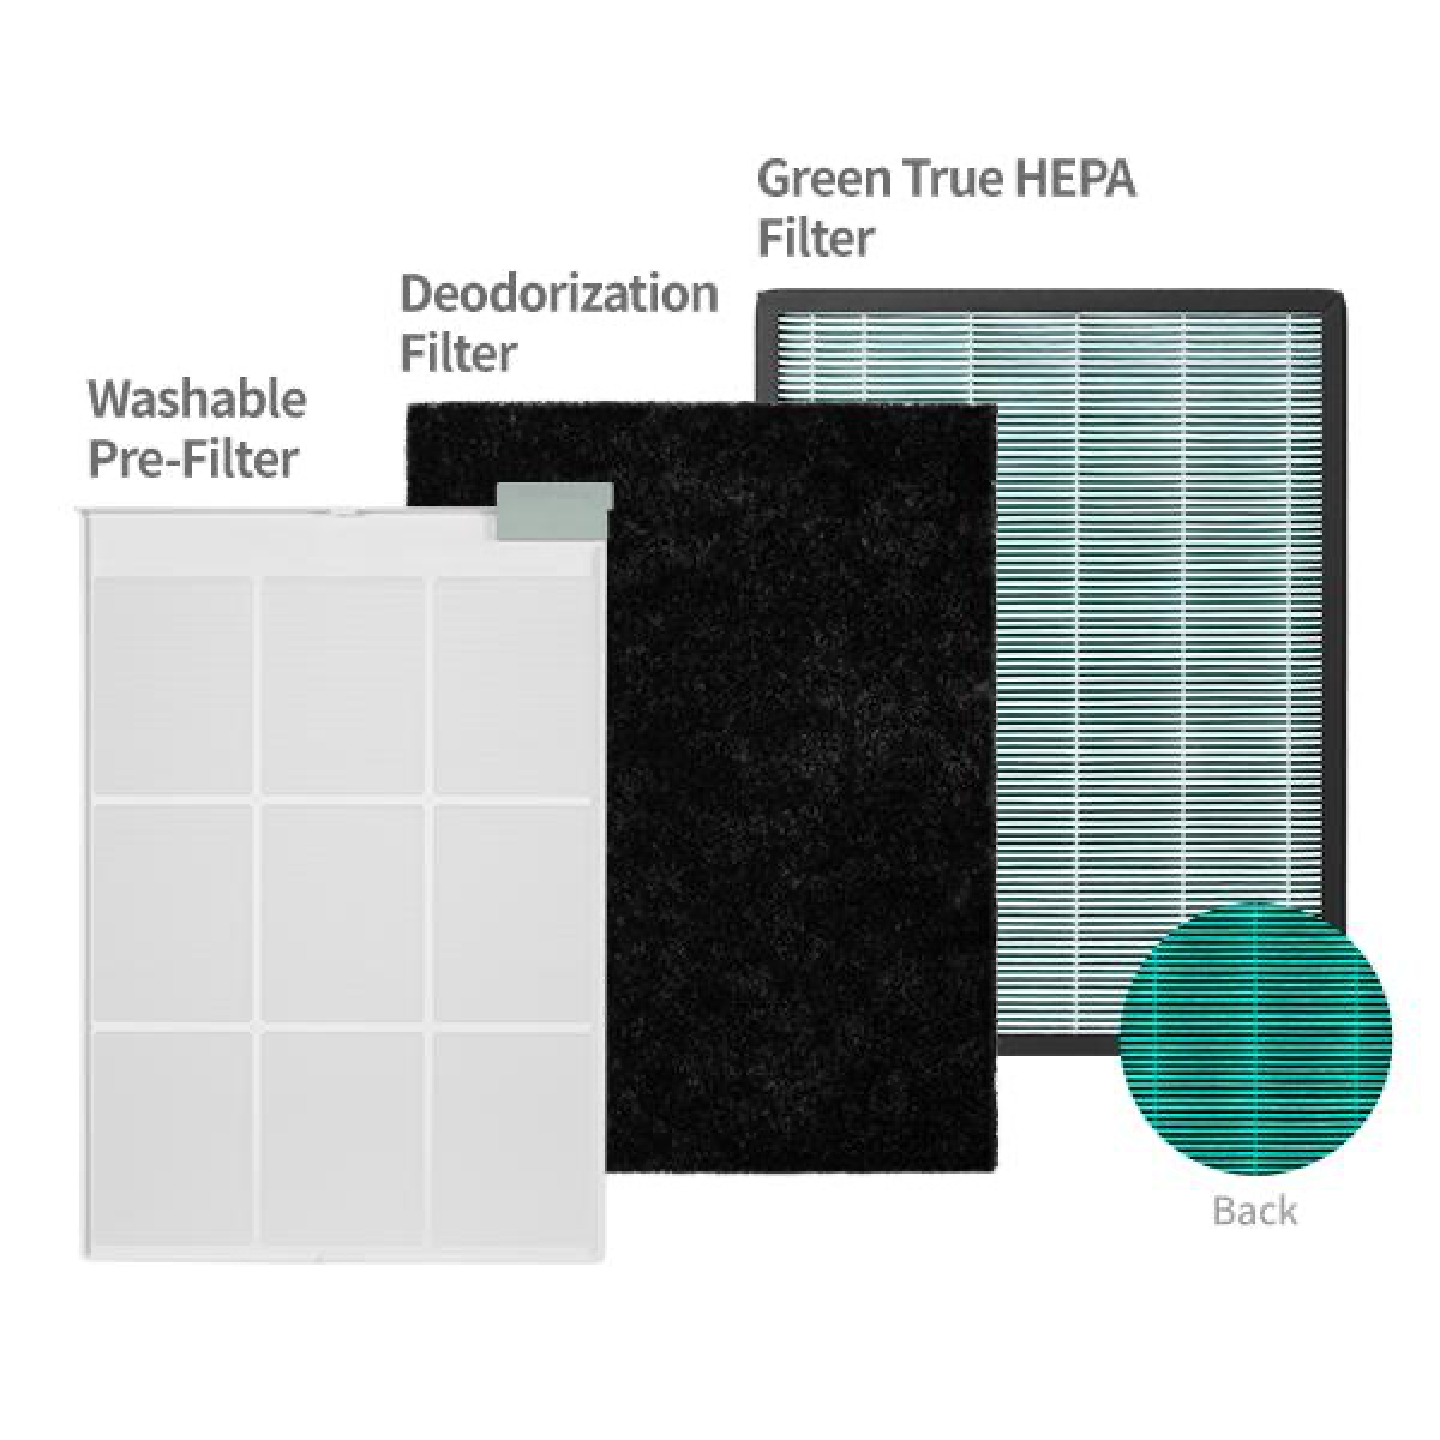 Airmega 150 & 160 Filter Set including Pre-Filter, Deodorization Filter and Green Tre HEPA Filter